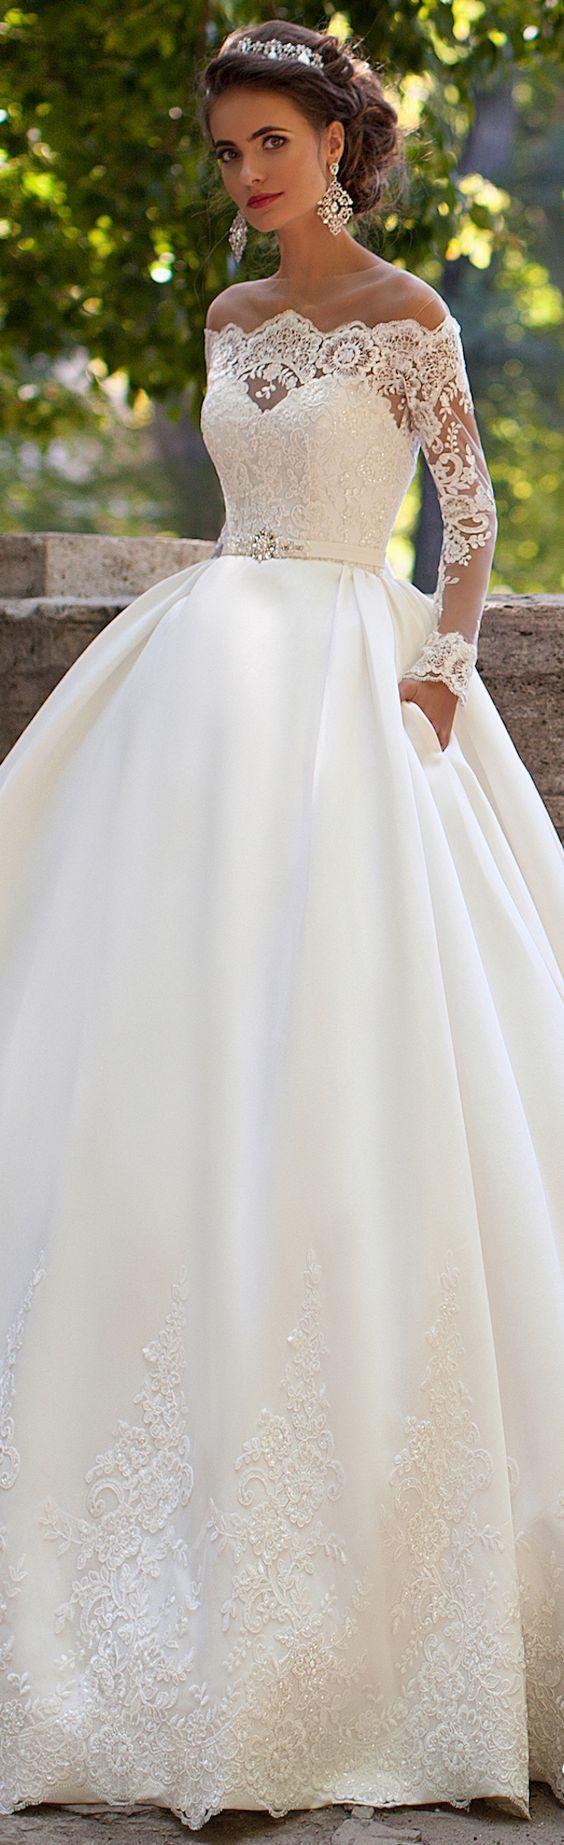 Wedding - 100 Stunning Long Sleeve Wedding Dresses